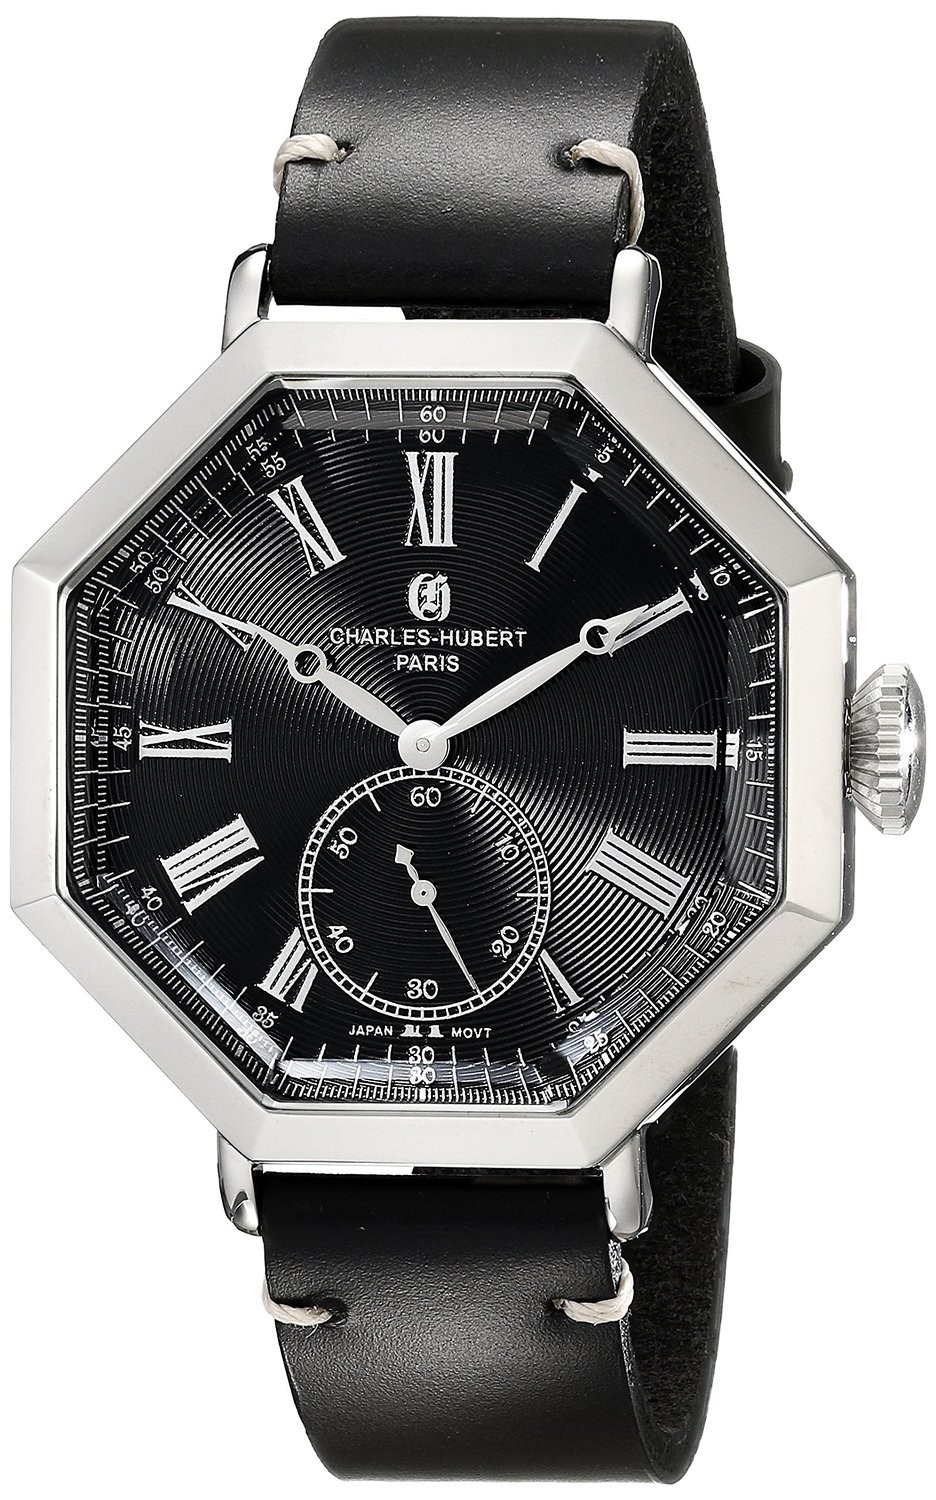 Charles-Hubert Paris Men's Stainless Steel Quartz Watch